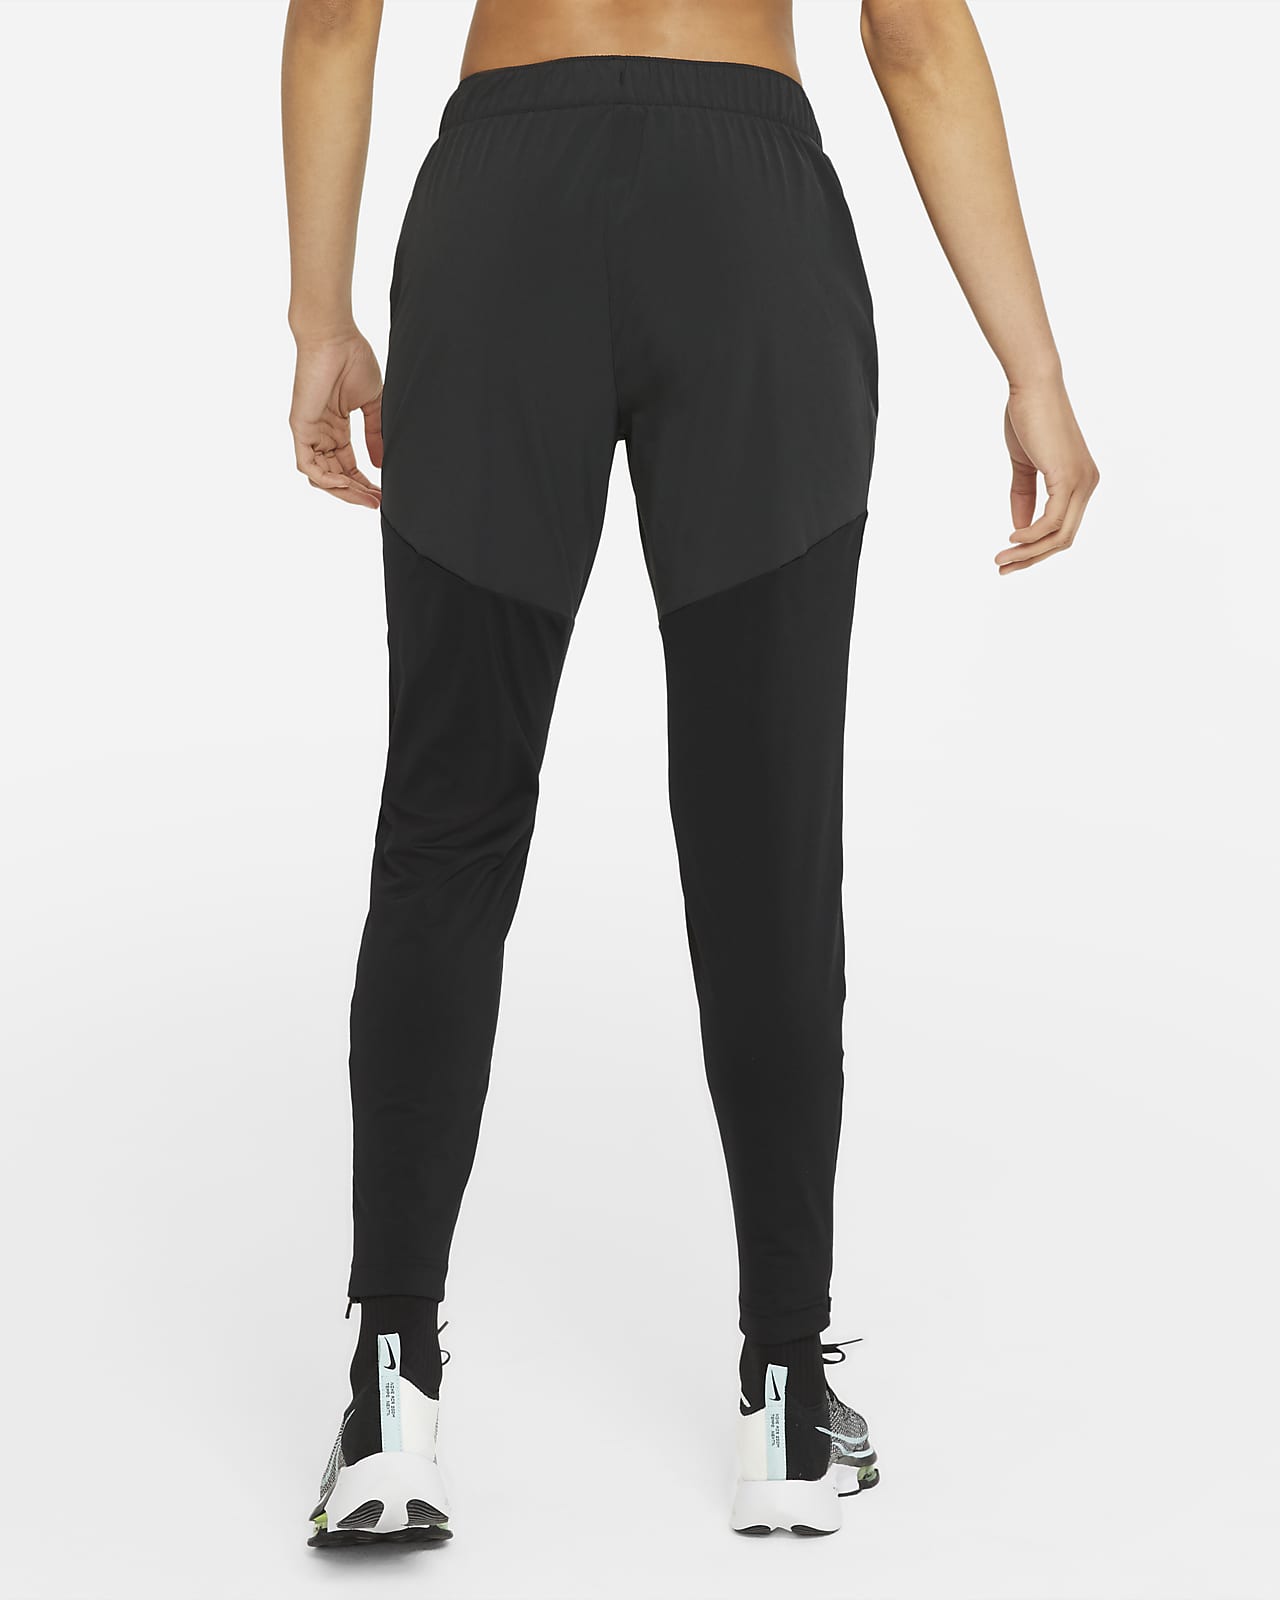 Nike Dri-Fit Phenom Elite Knit Running Pants Black DQ4740-010 Men's | eBay